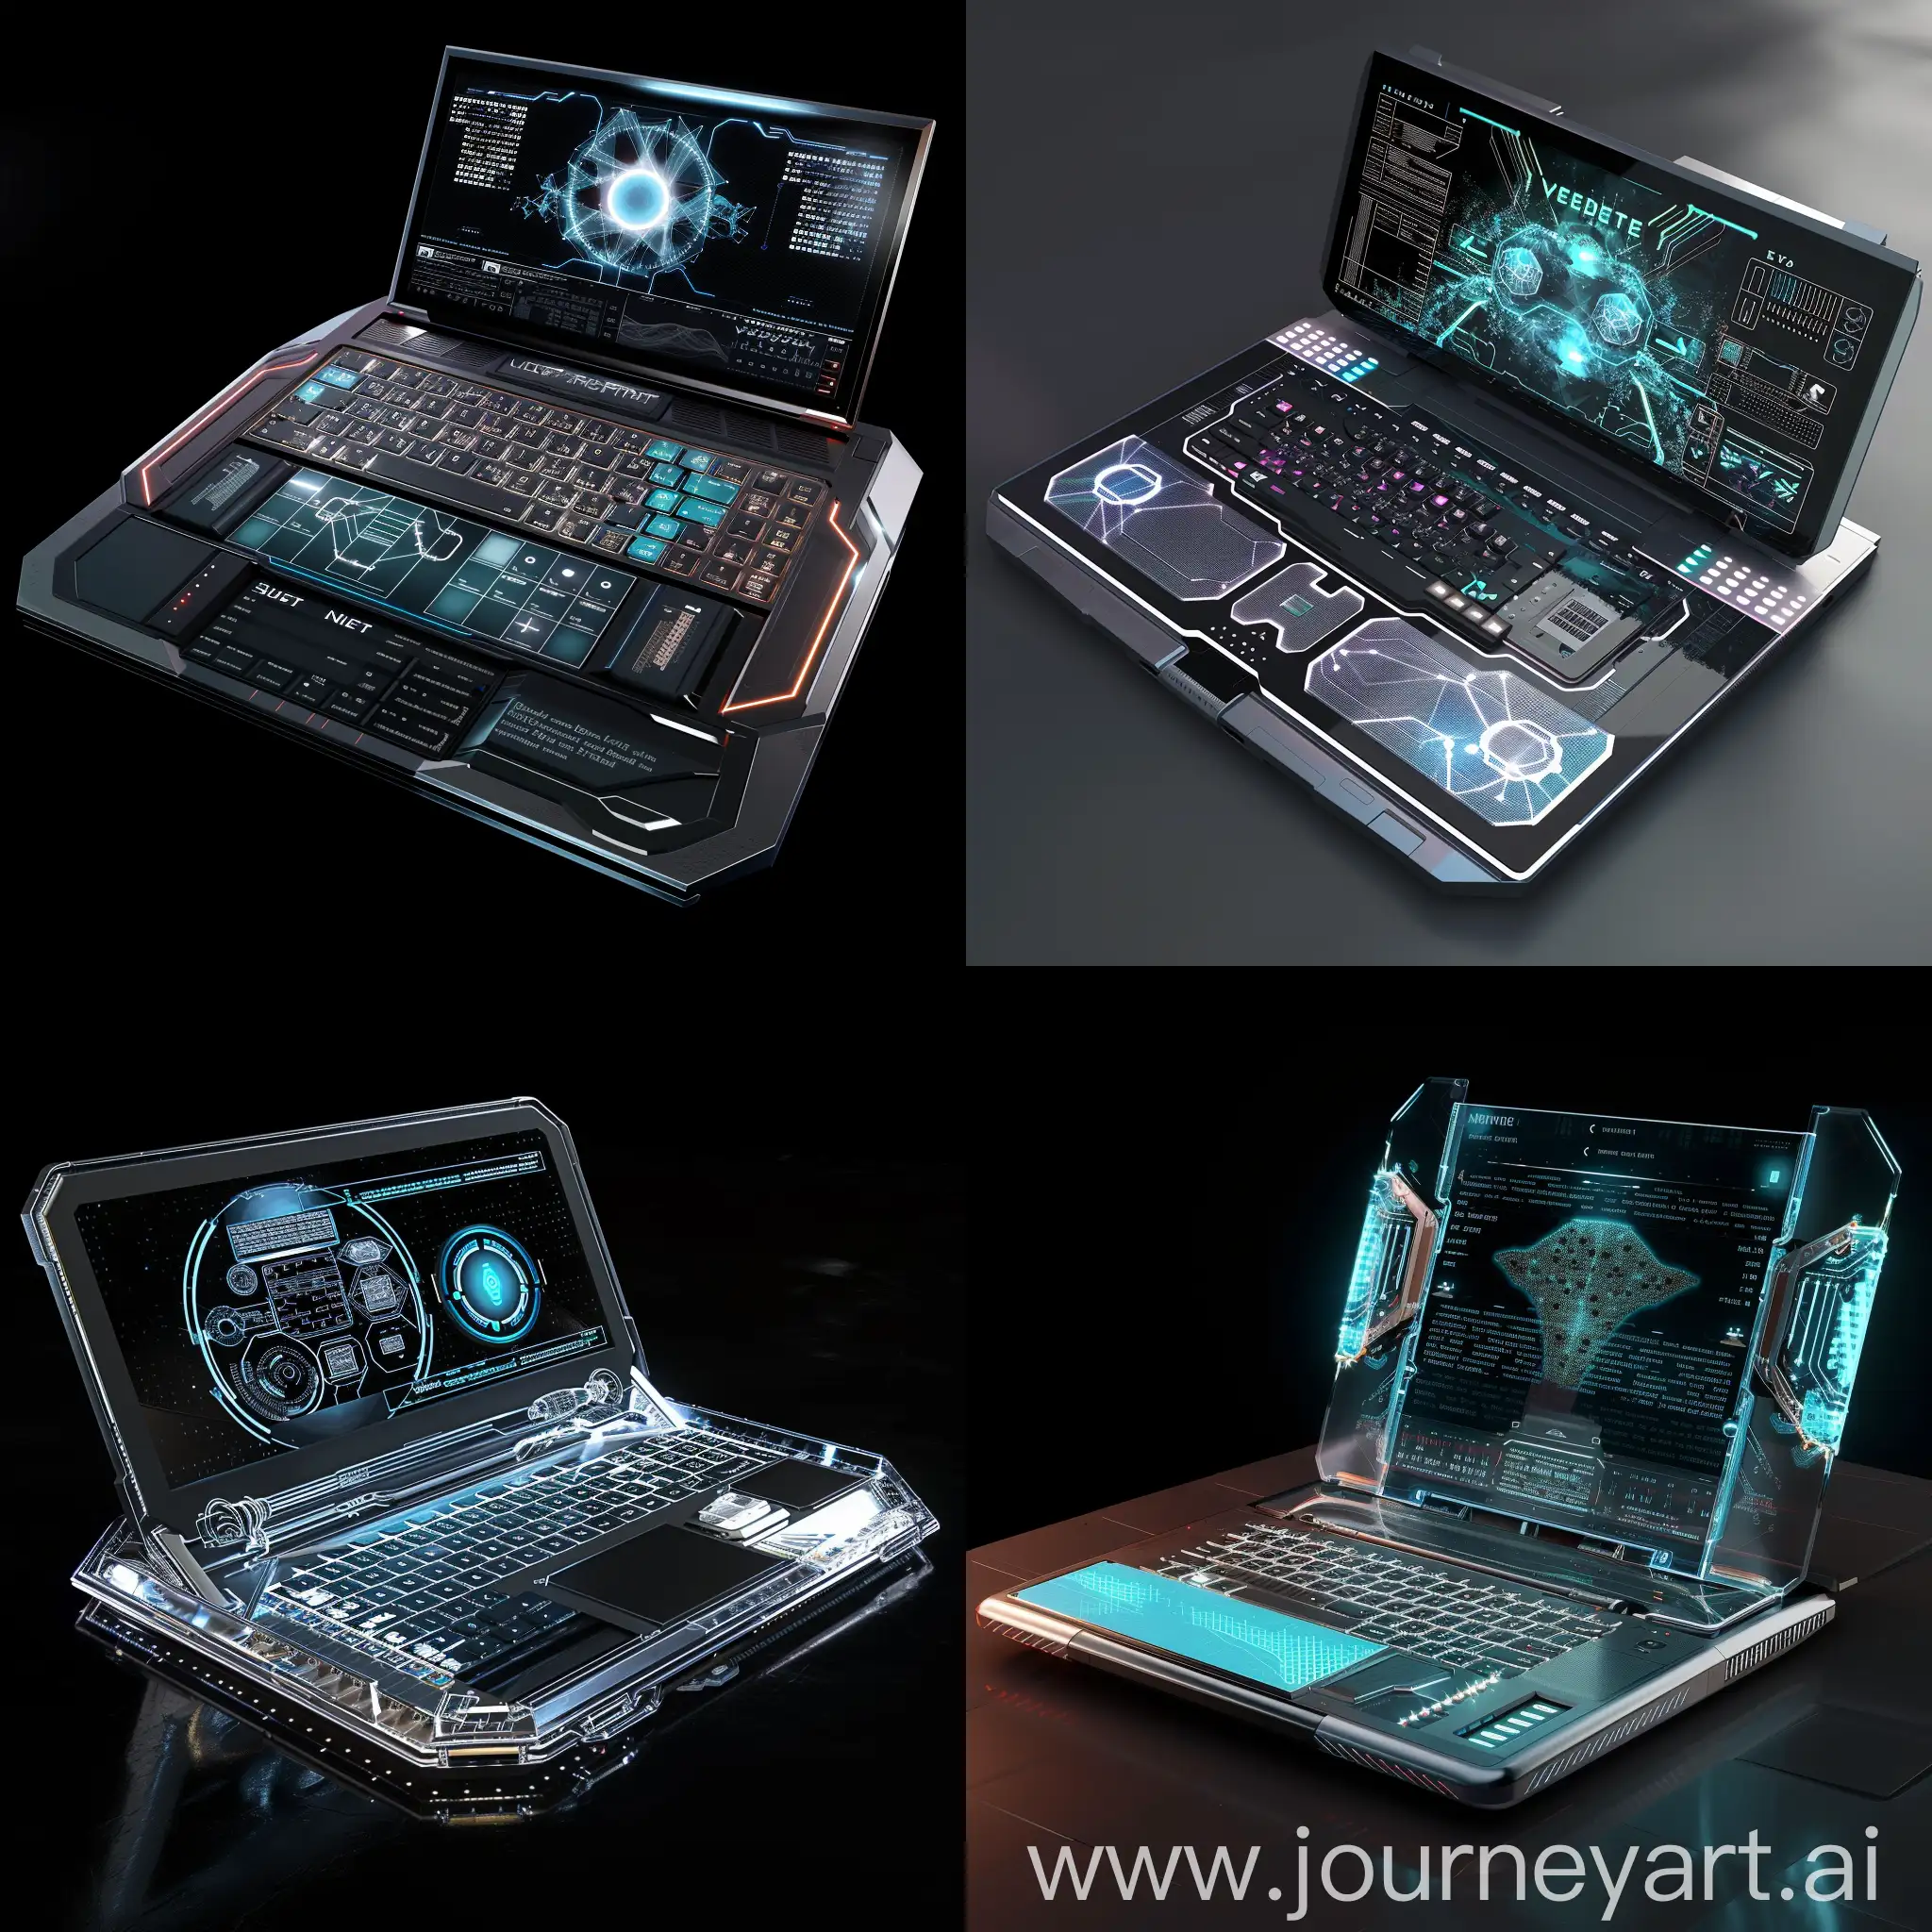 Futuristic-Quantum-Computing-Laptop-with-Holographic-Interface-and-Modular-Design